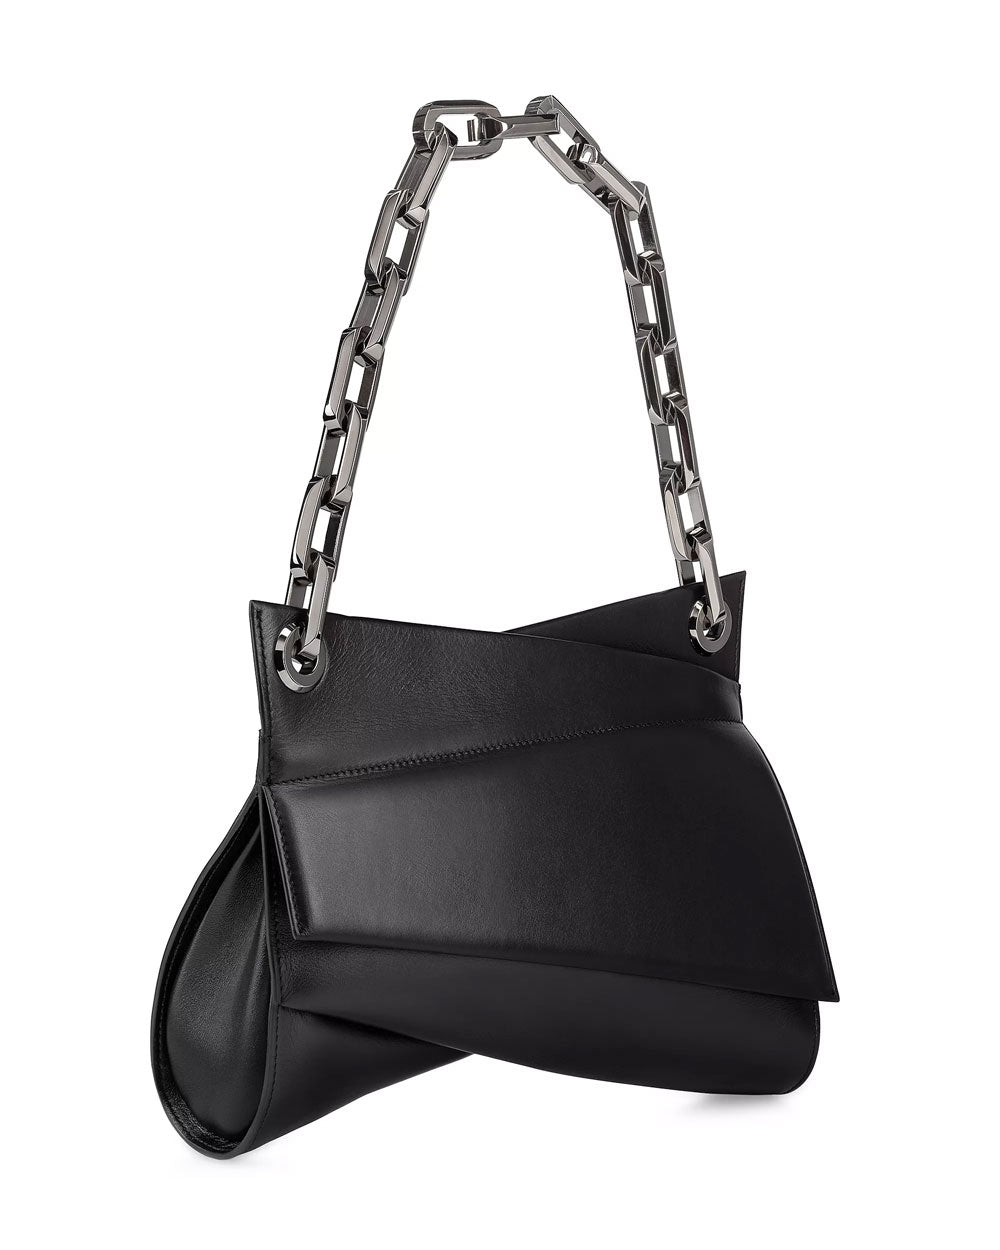 Loubitwist Chain Bag in Black